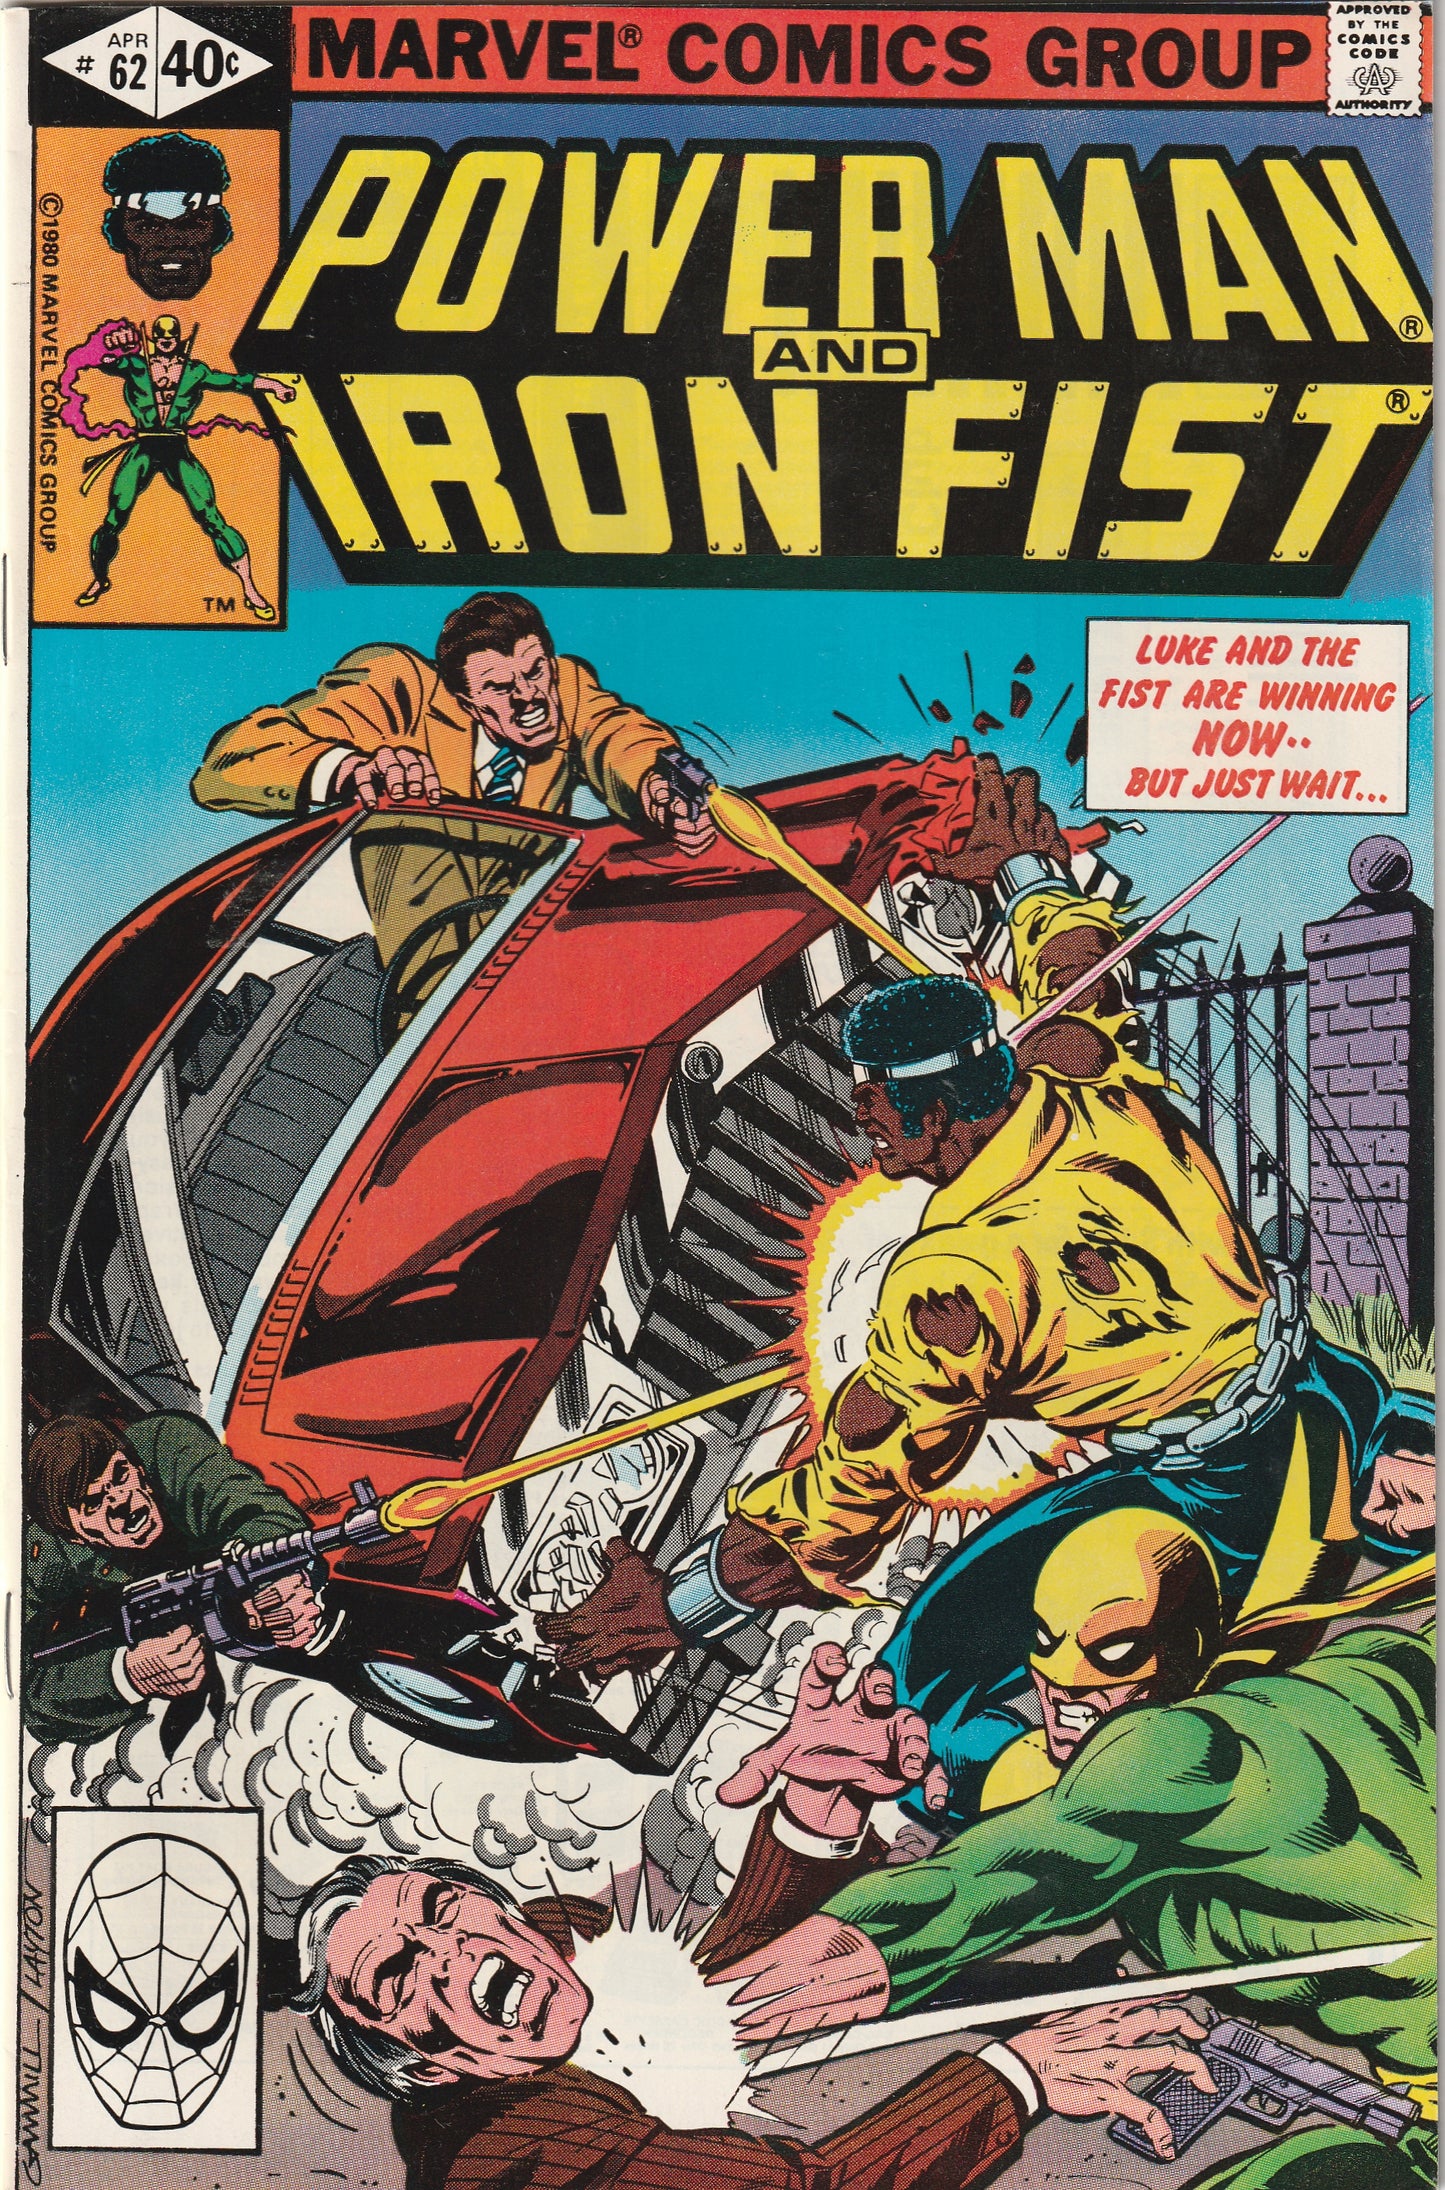 Power Man and Iron Fist #62 (1980) - Death of Thunderbolt